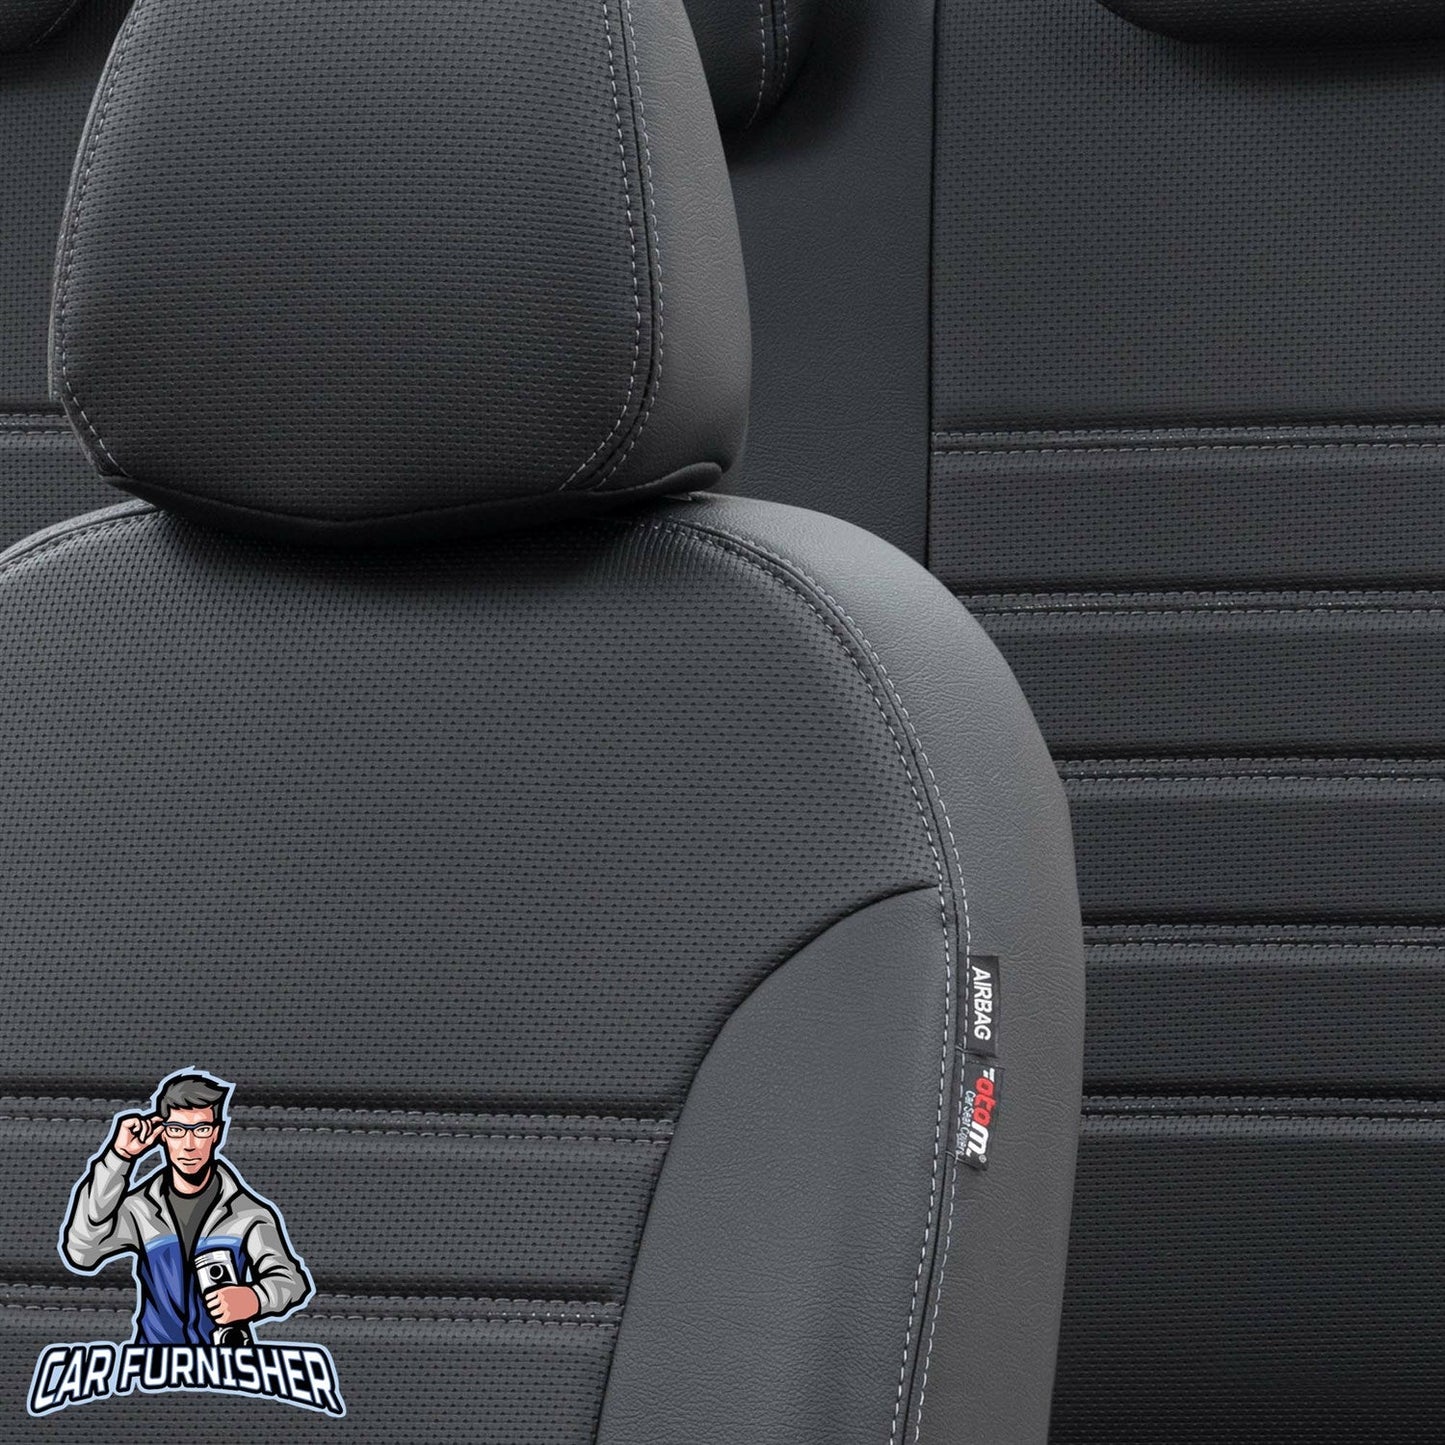 Mini Cooper Seat Covers New York Leather Design Black Leather